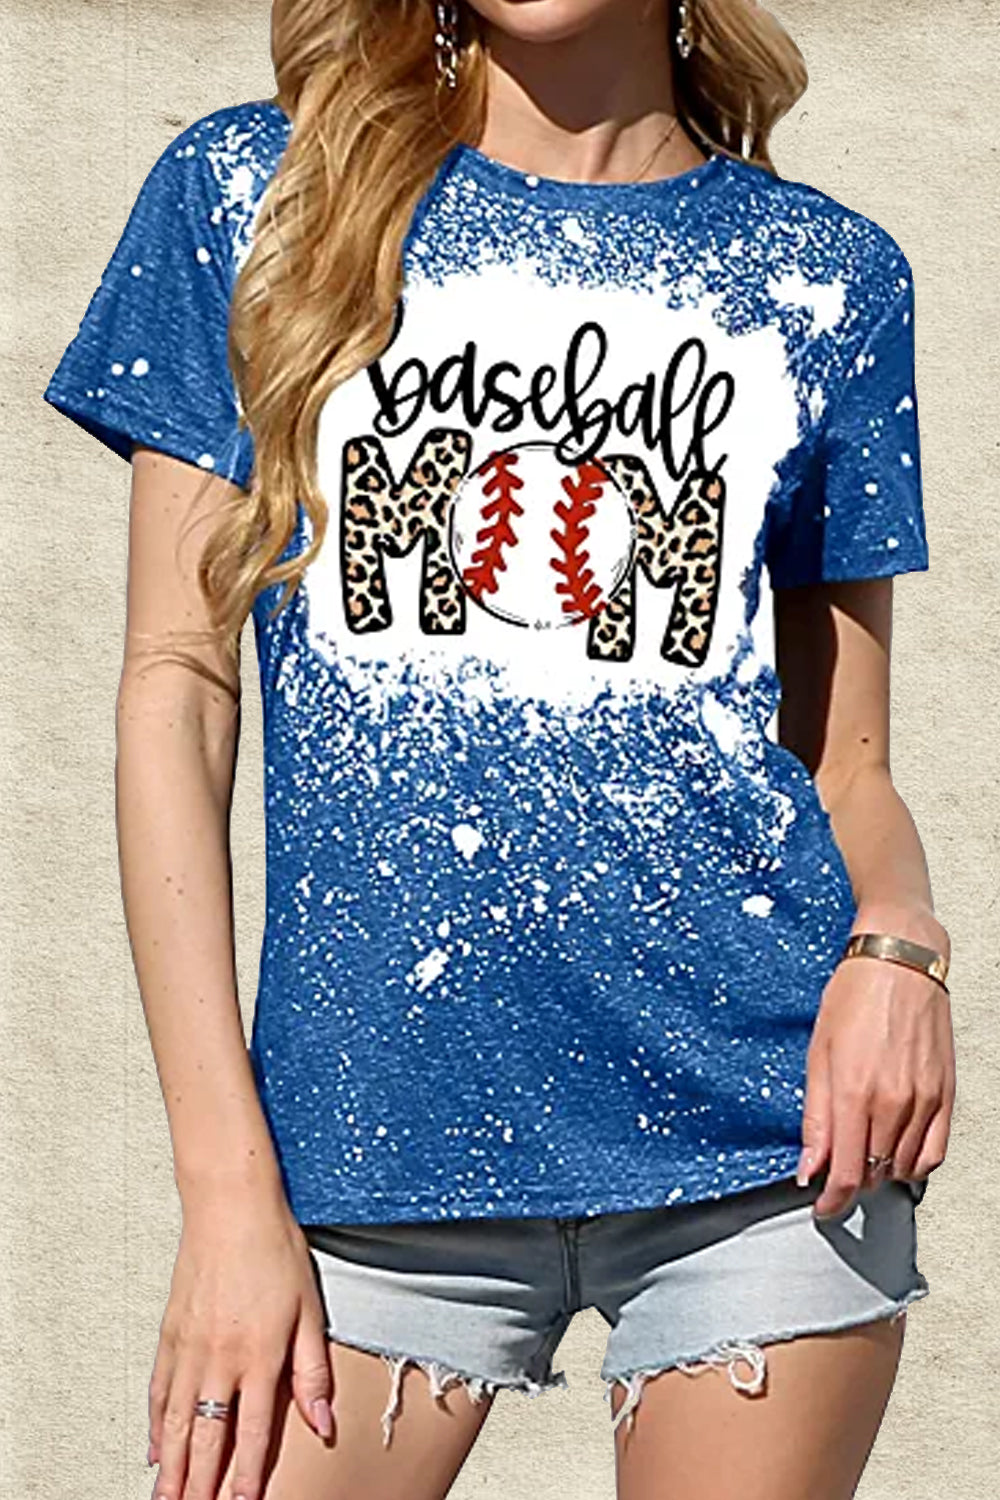 Baseball Mom Leopard Bleached Print T-Shirt